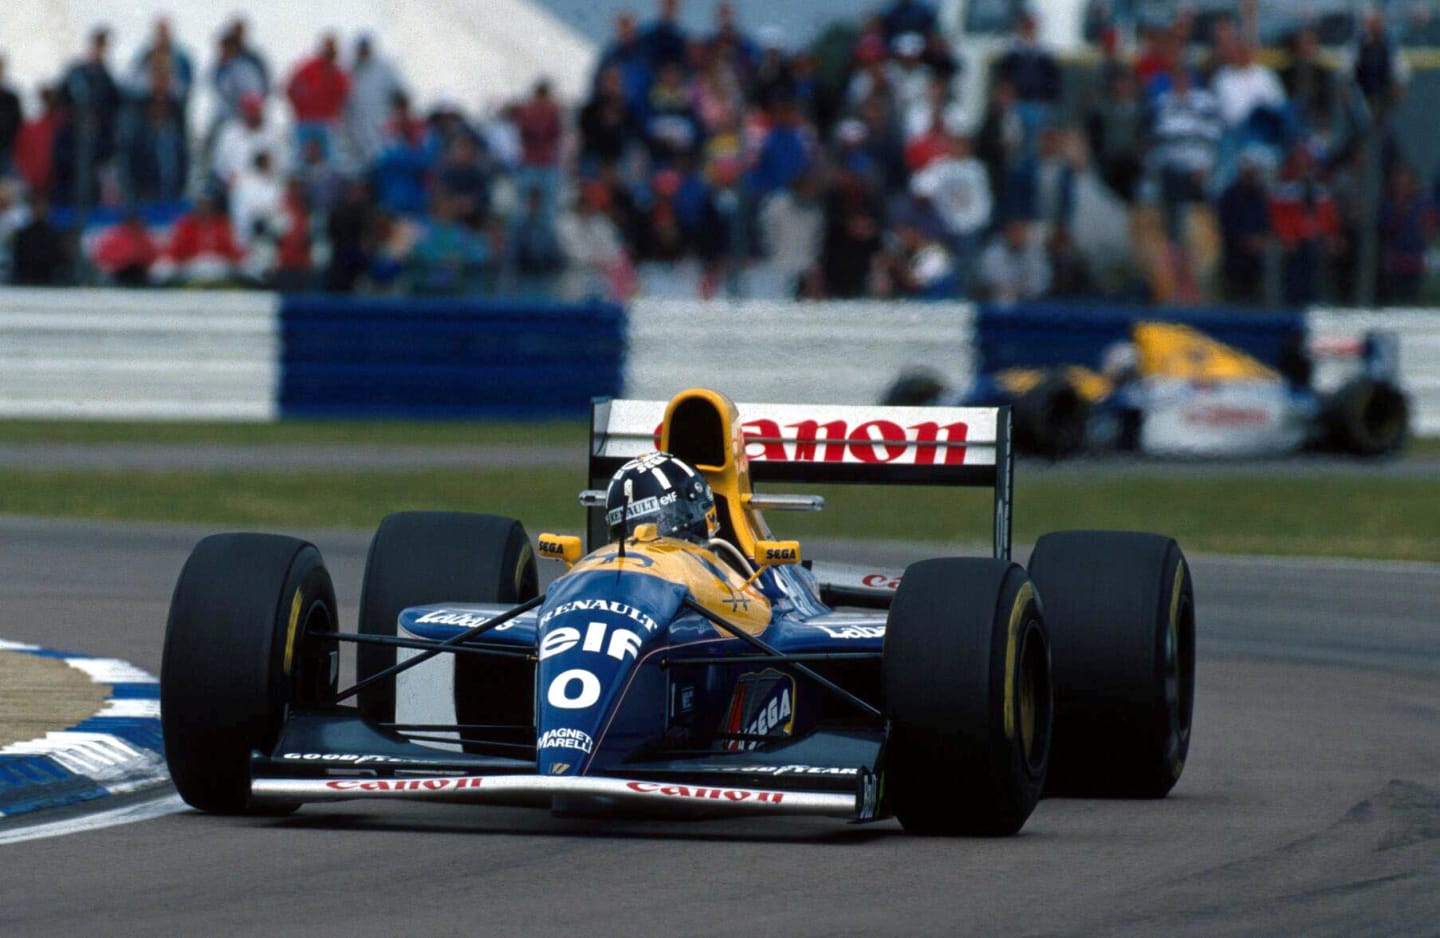 Damon Hill (GBR) Williams FW15C, retired with engine failure.
British Grand Prix, Silverstone,